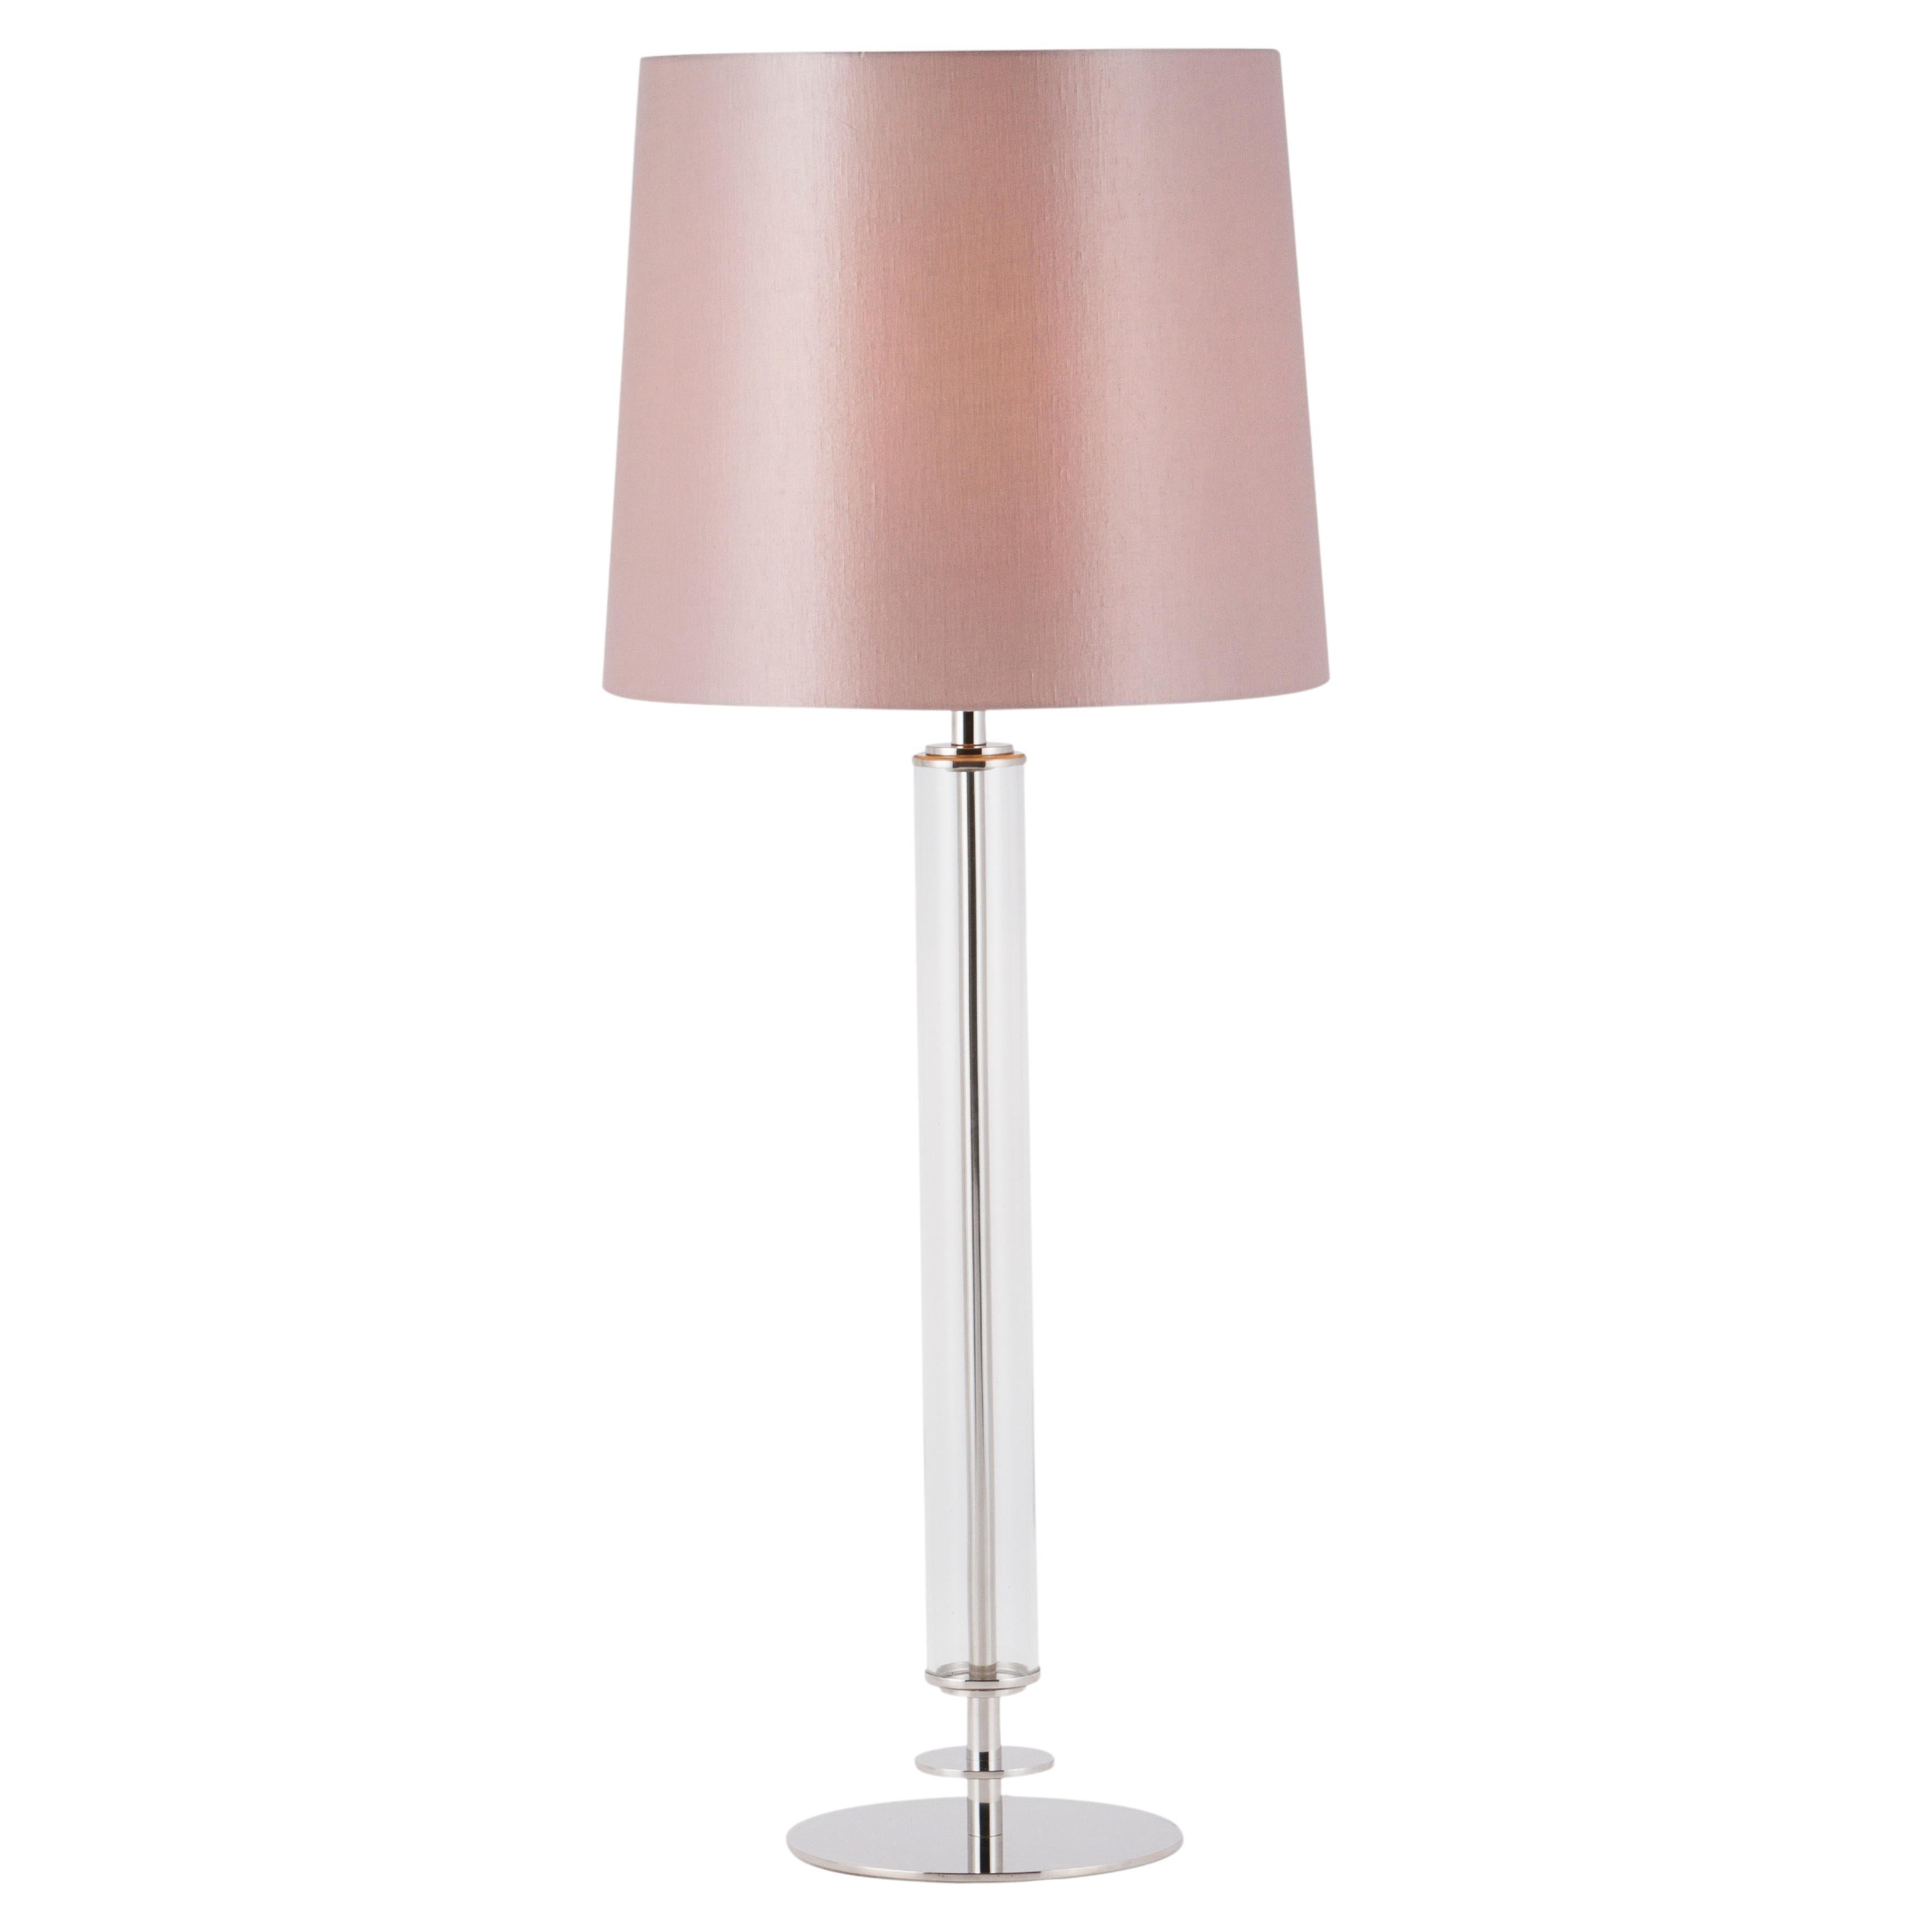 Greenapple Table Lamp, Dumont Table Lamp, Pink Lampshade, Handmade in Portugal